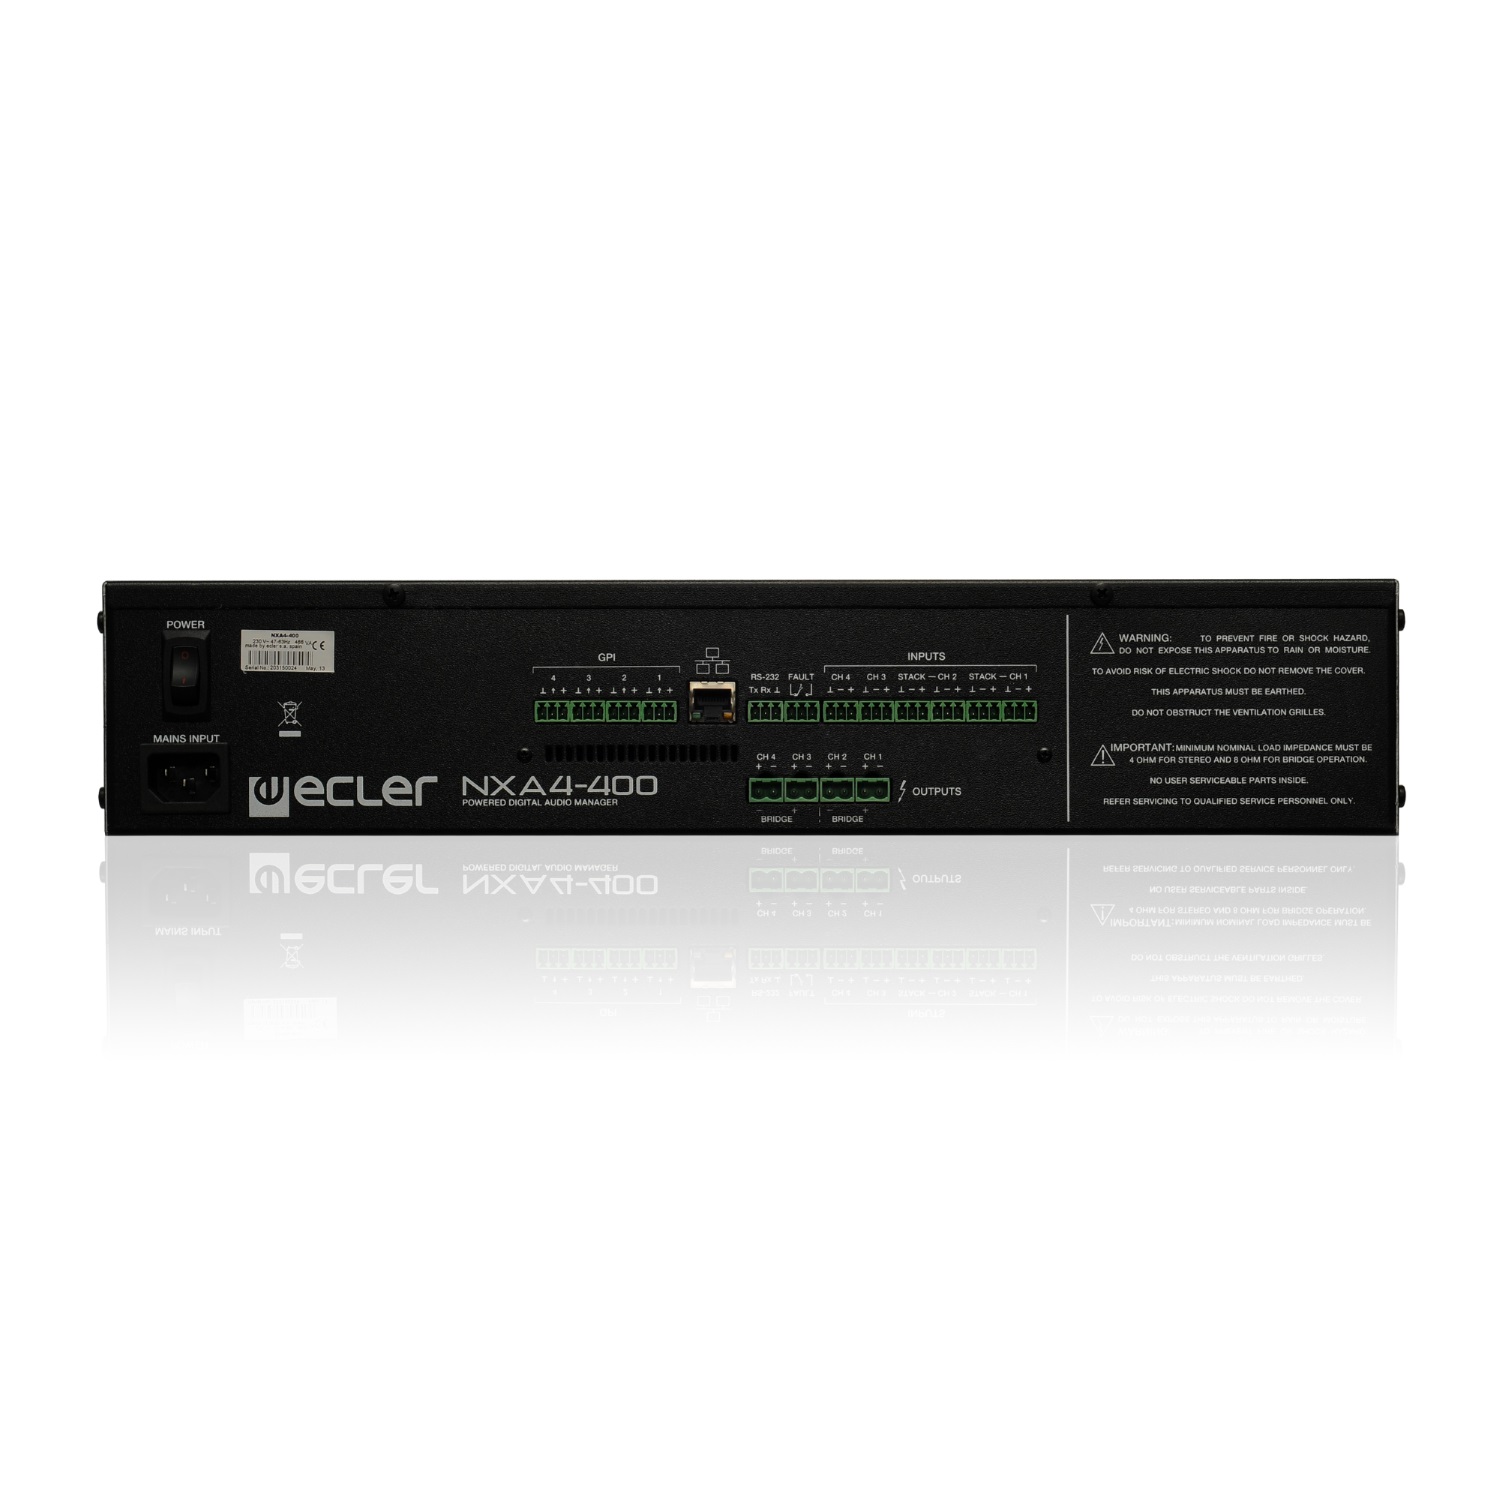 NXA4-400 Digital Audio Manager